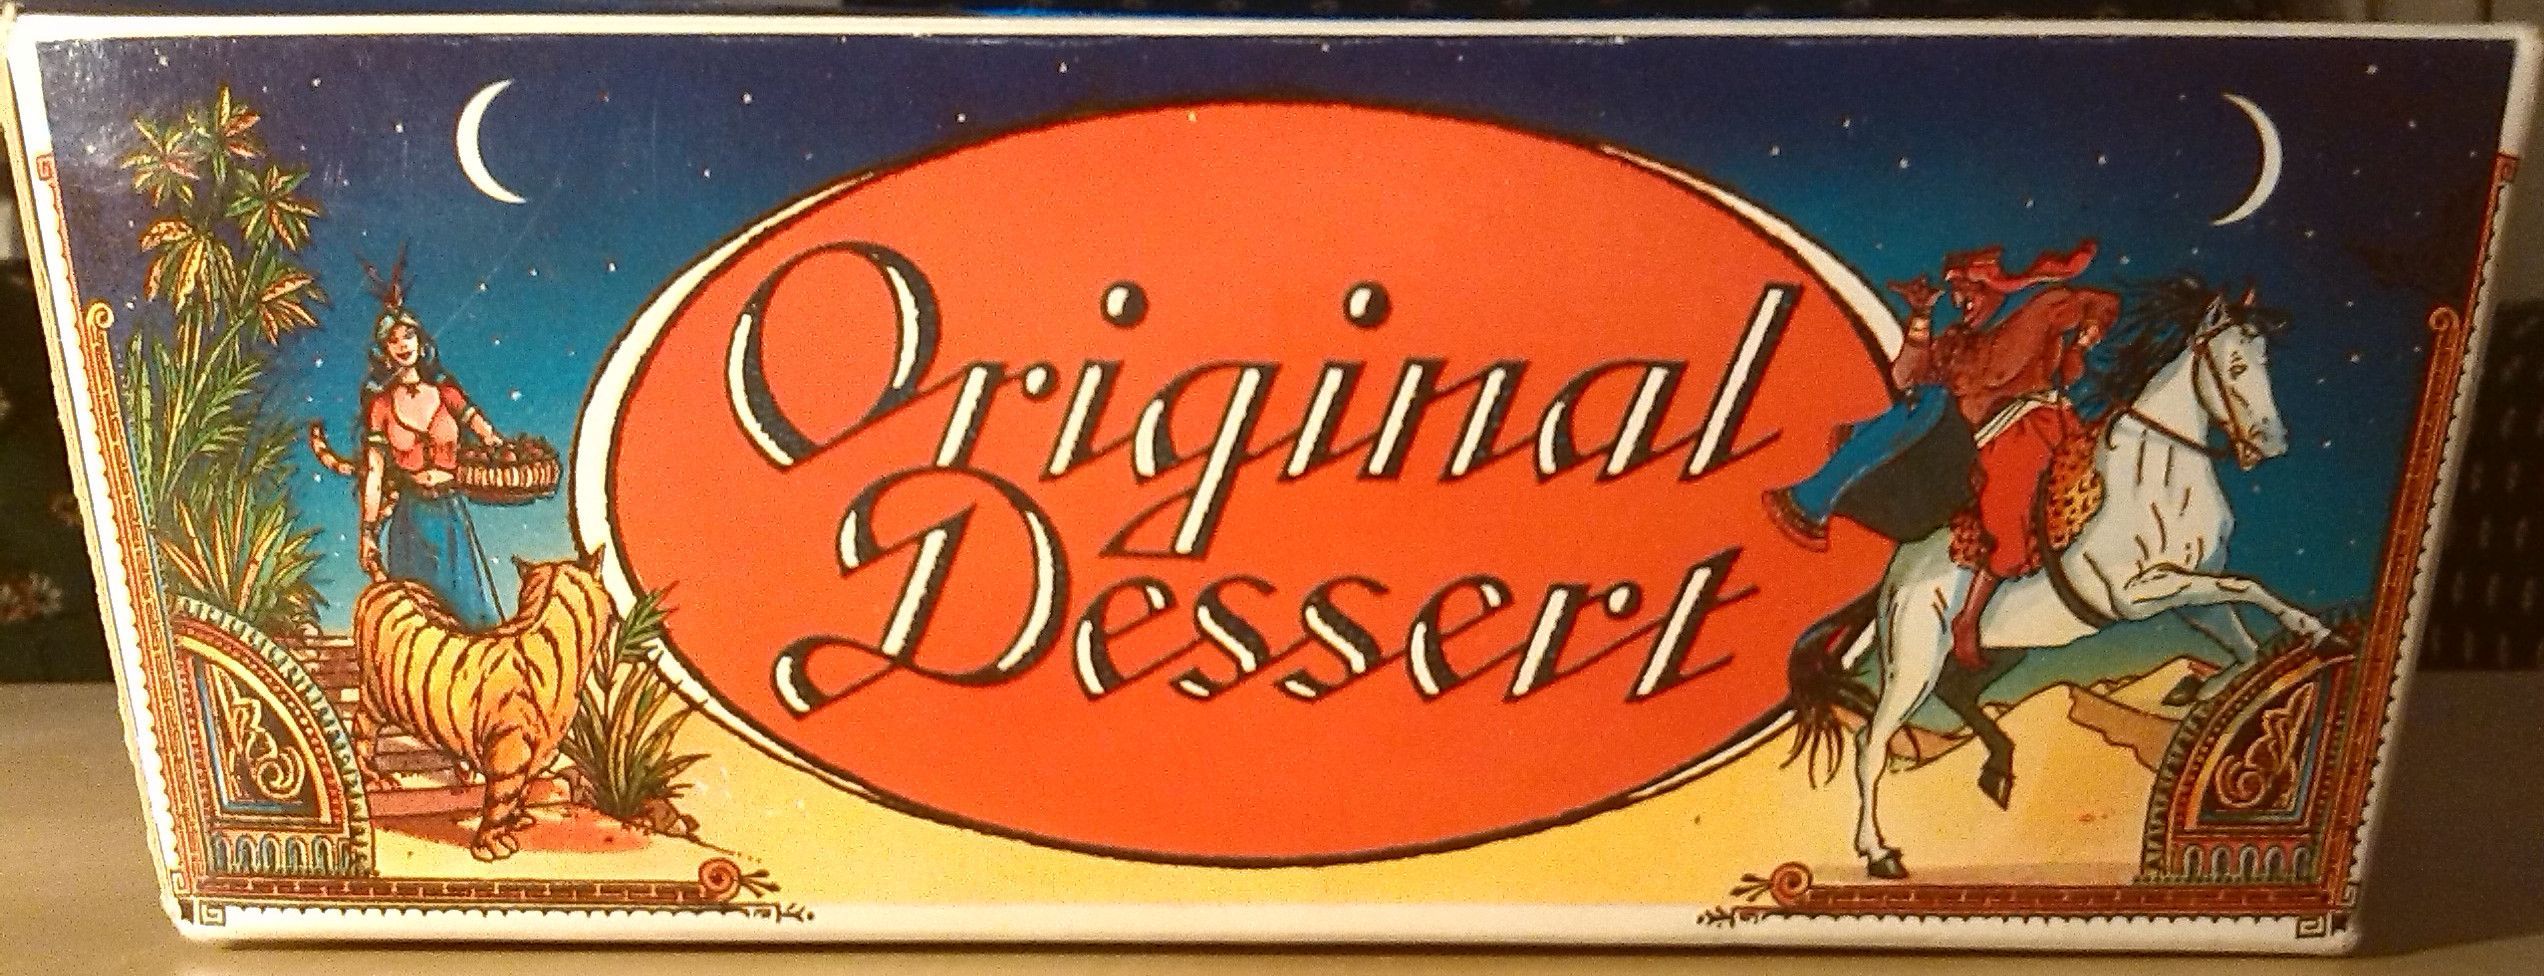 Original Dessert